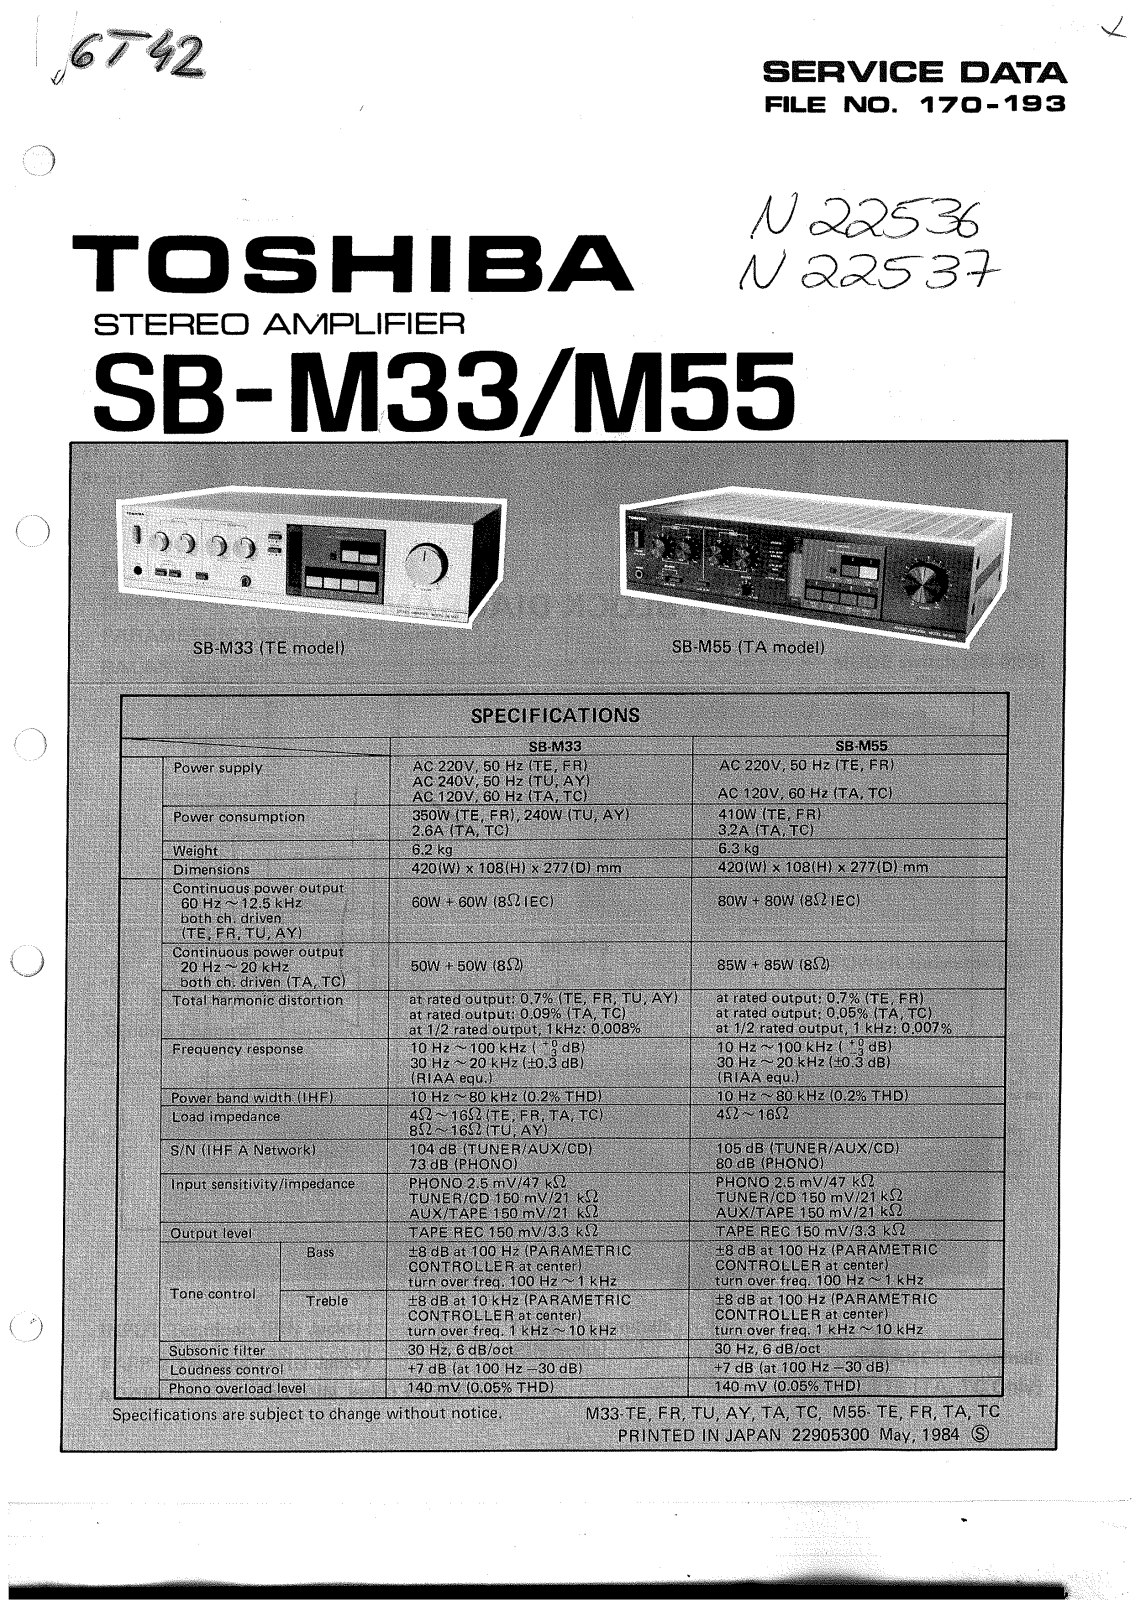 Toshiba SB-M33, SB-M55 Service Manual